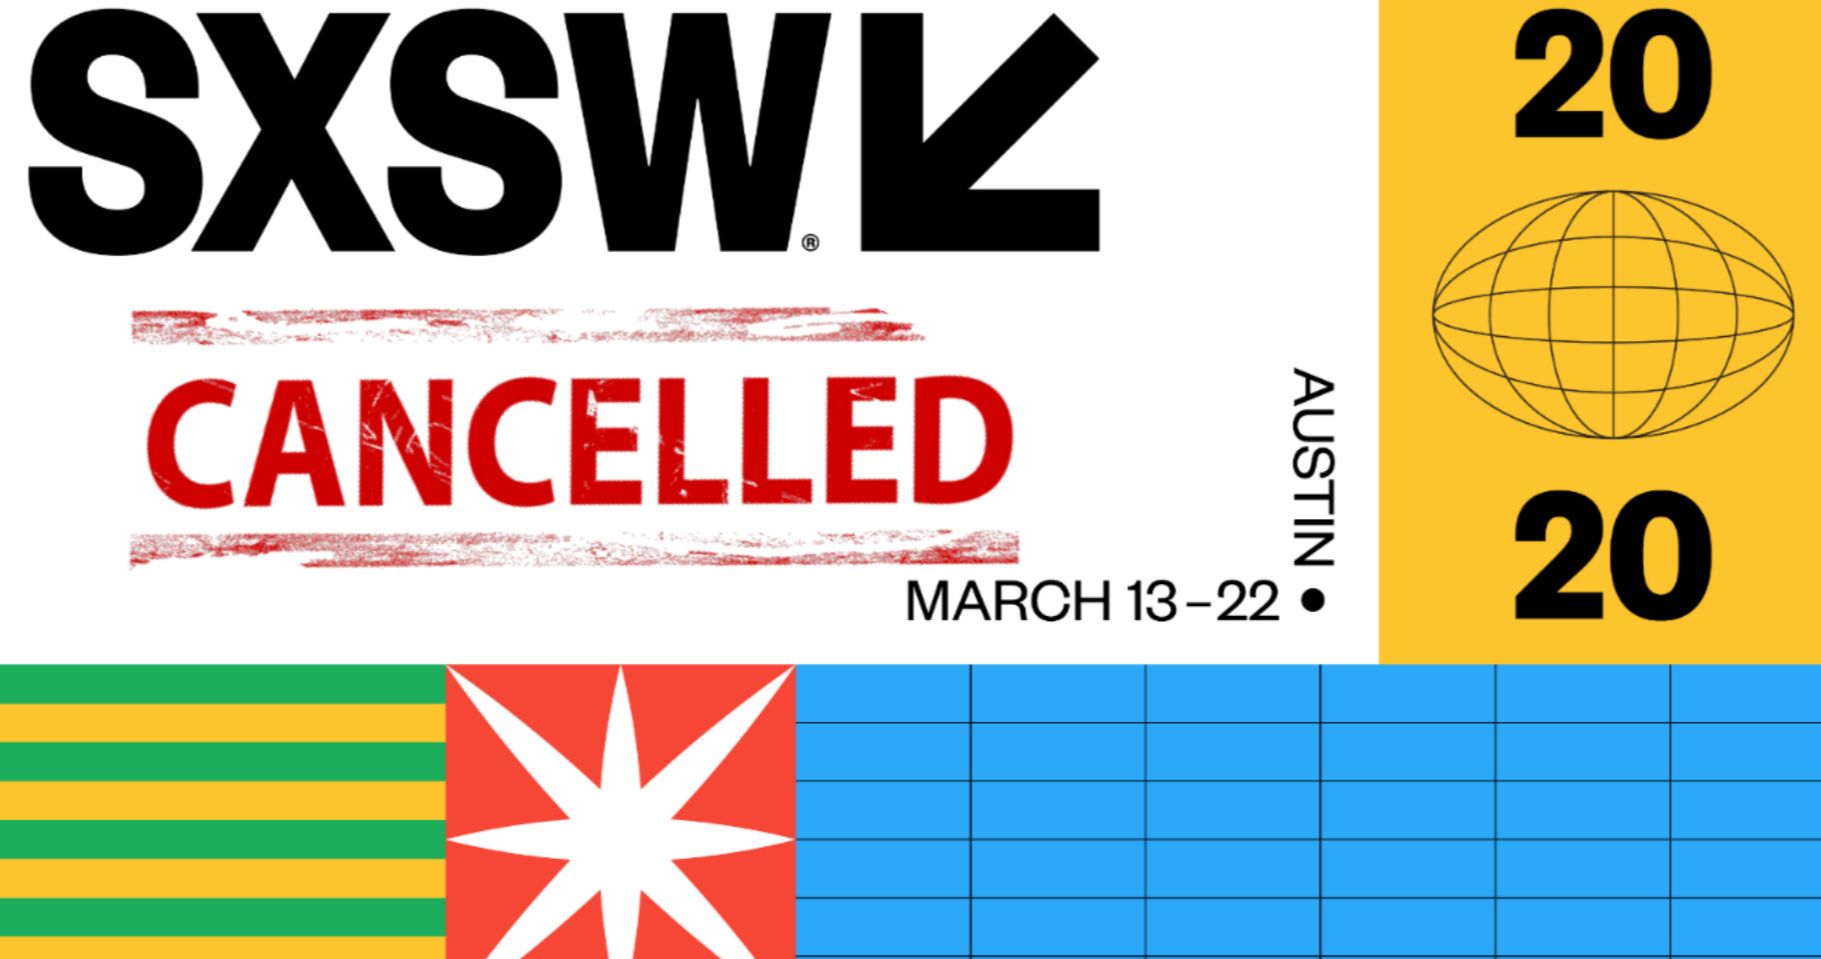 SXSW Canceled as Austin Declares Local Disaster Over Coronavirus